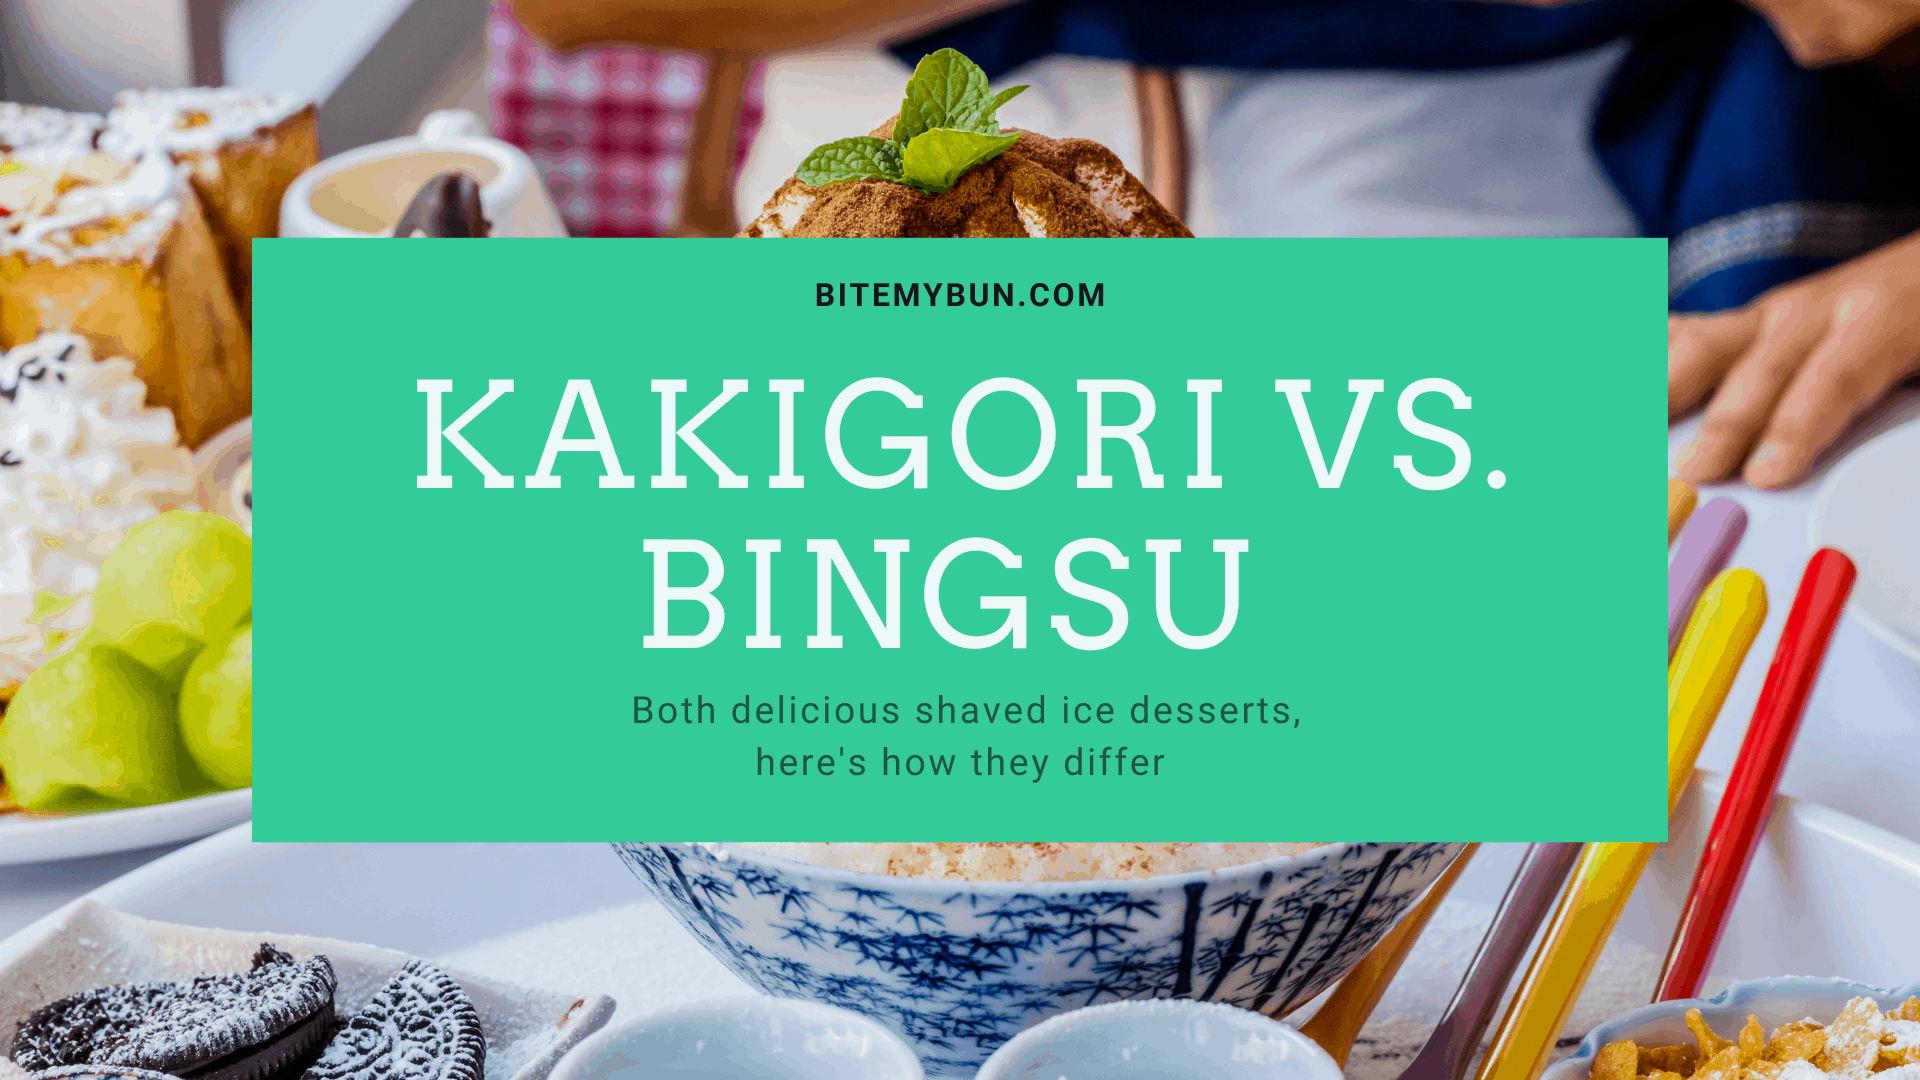 Kakigori vs. bingsu | Both delicious shaved ice desserts, here's how they differ